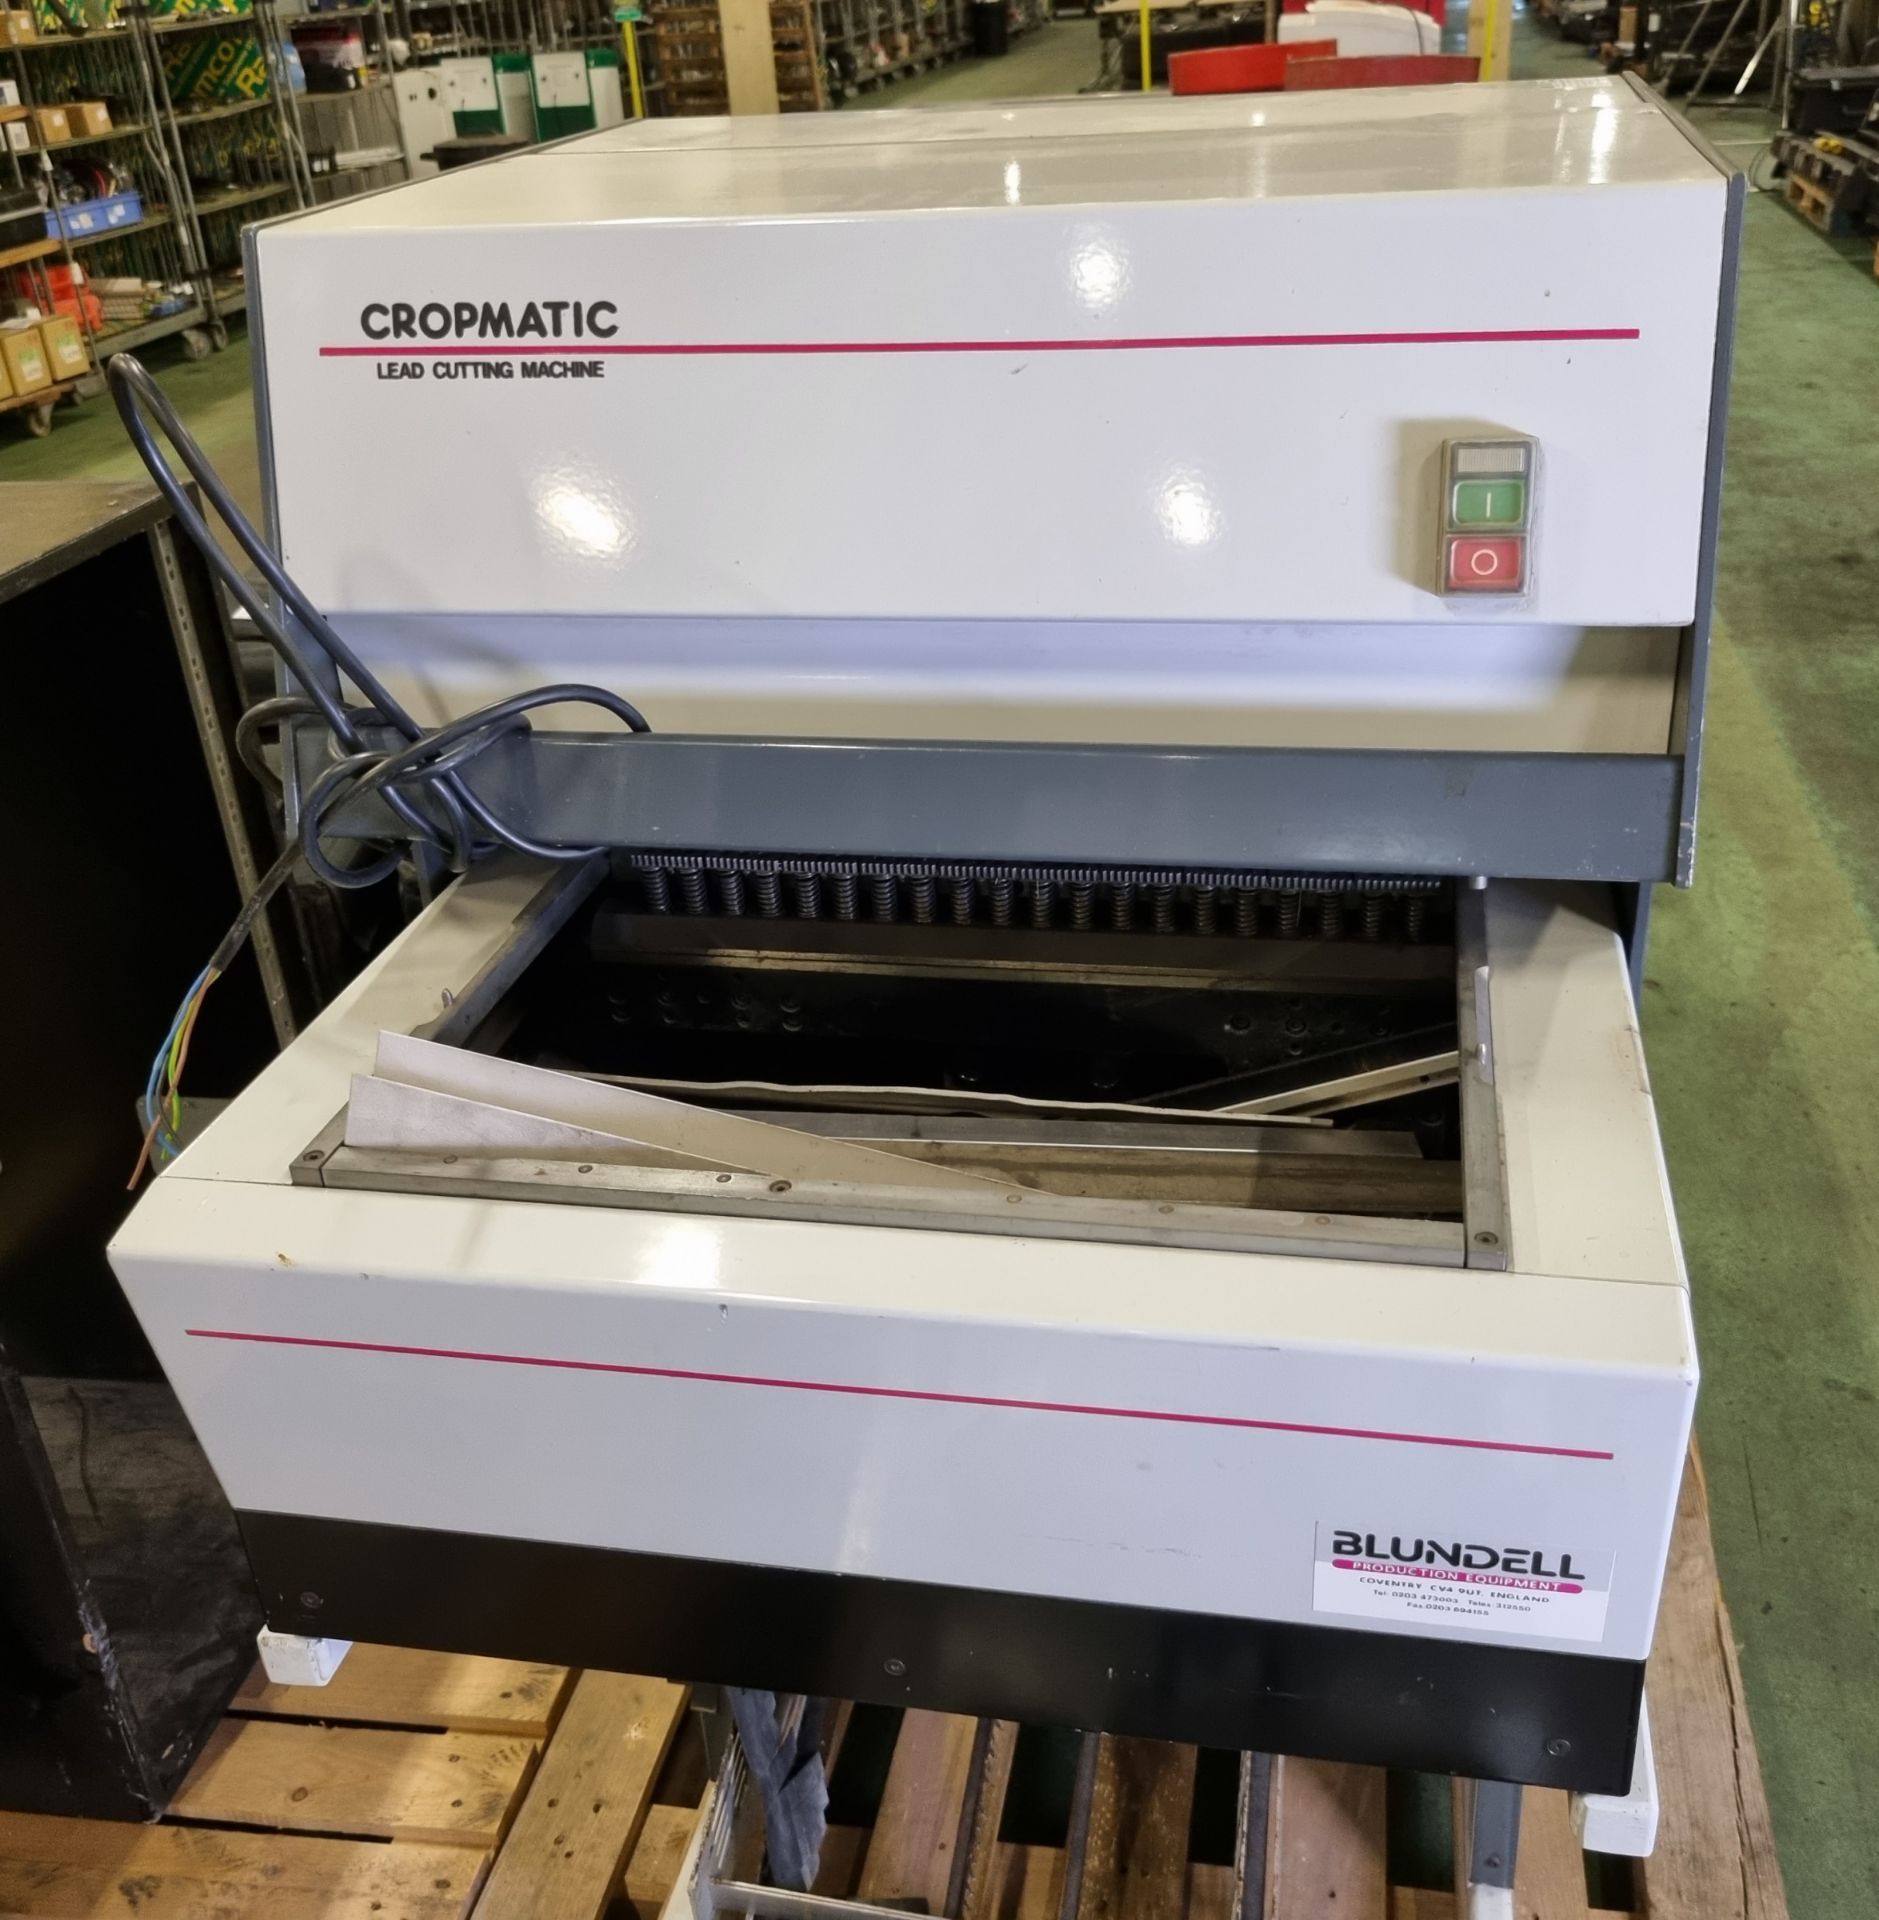 Blundell Production Equipment Cropmatic lead cutting machine - Serial No. 455 - 3 phase 415V 400W - Bild 2 aus 5